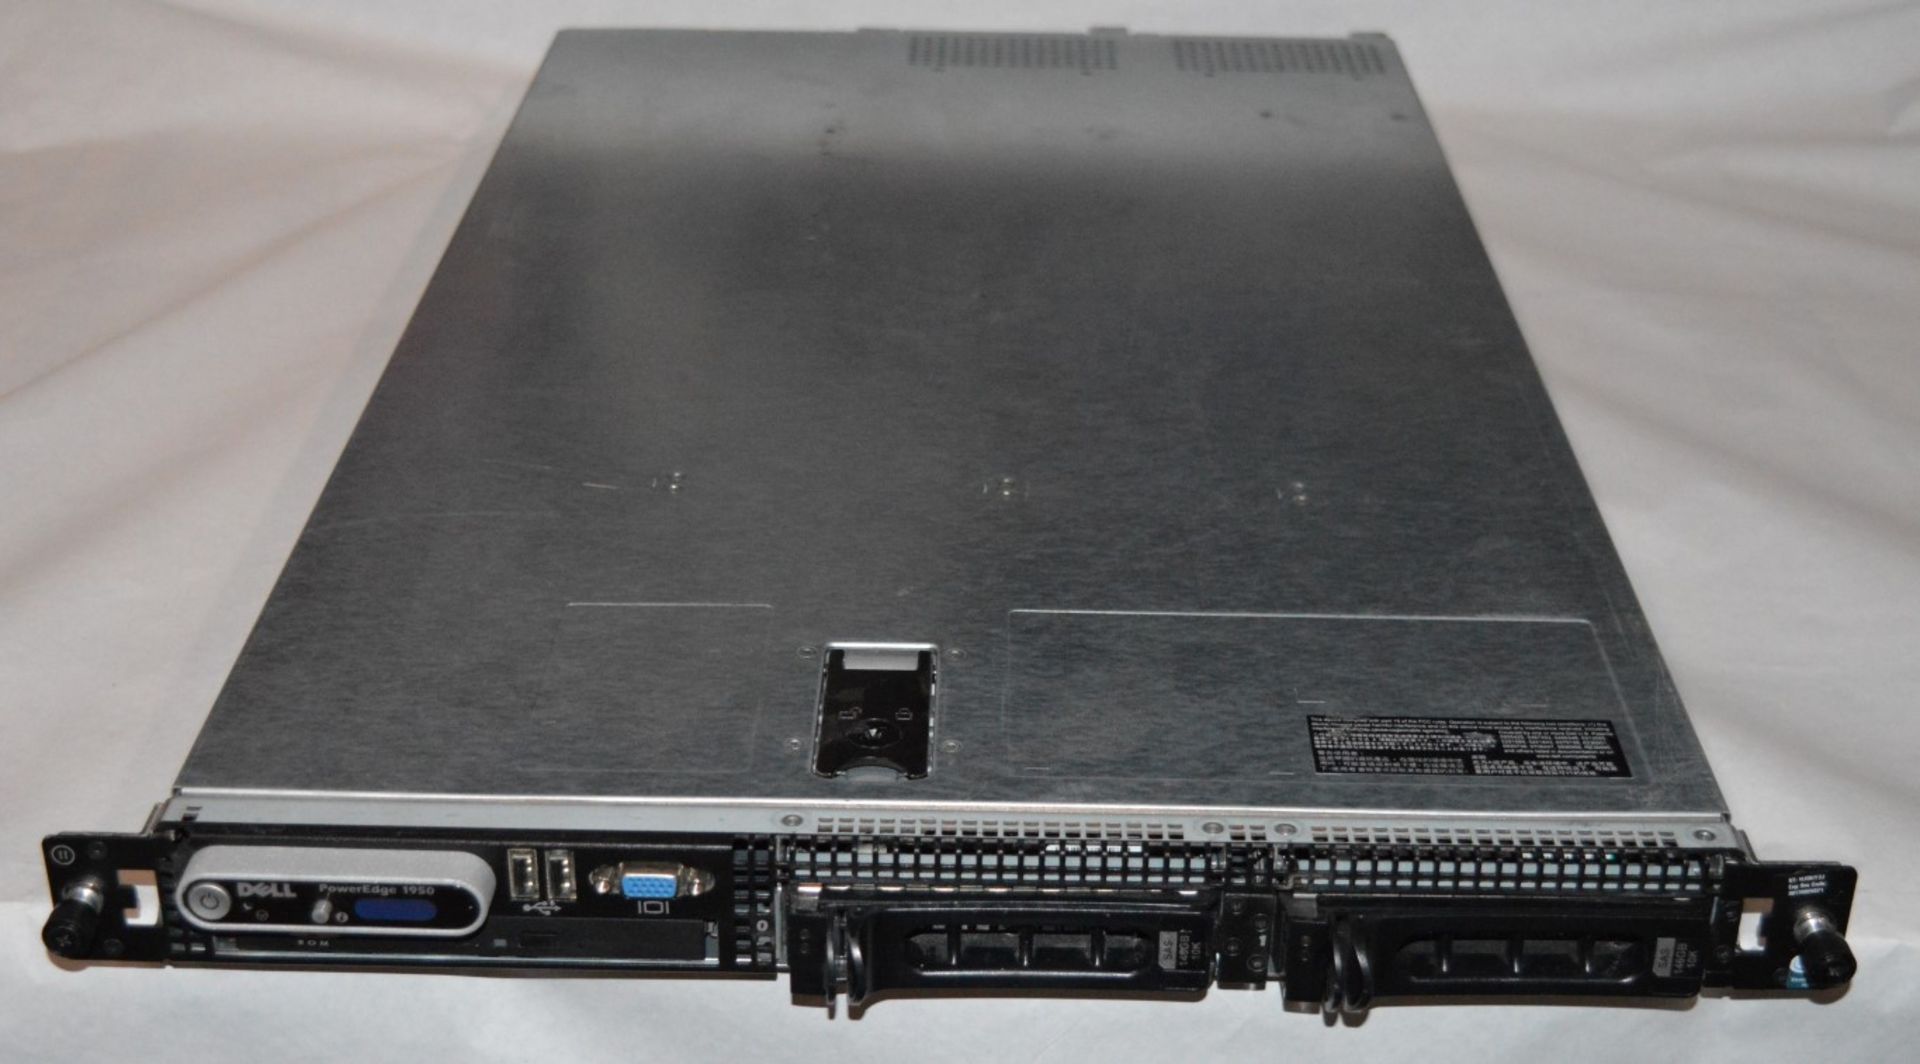 1 x Dell Poweredge 1950 1U Rackmount File Server - 2ghz Intel Quad Core Processor - 4gb Ram - 2 x - Image 2 of 12